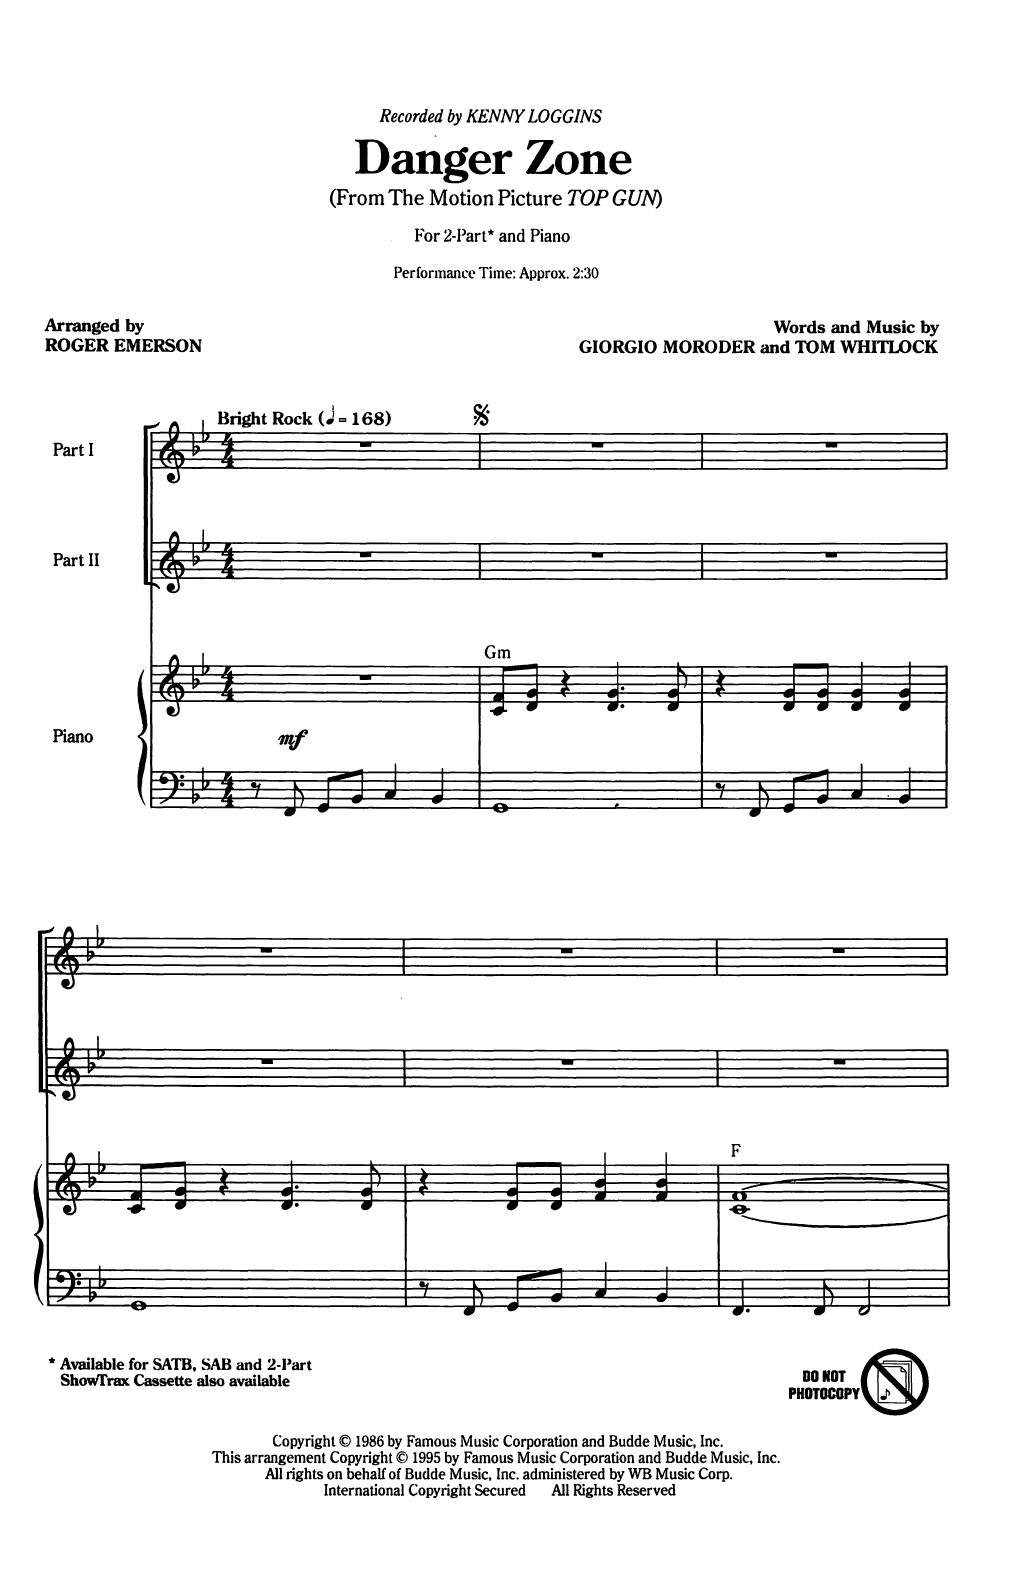 Kenny Loggins Danger Zone (arr. Roger Emerson) Sheet Music Notes & Chords for SAB Choir - Download or Print PDF